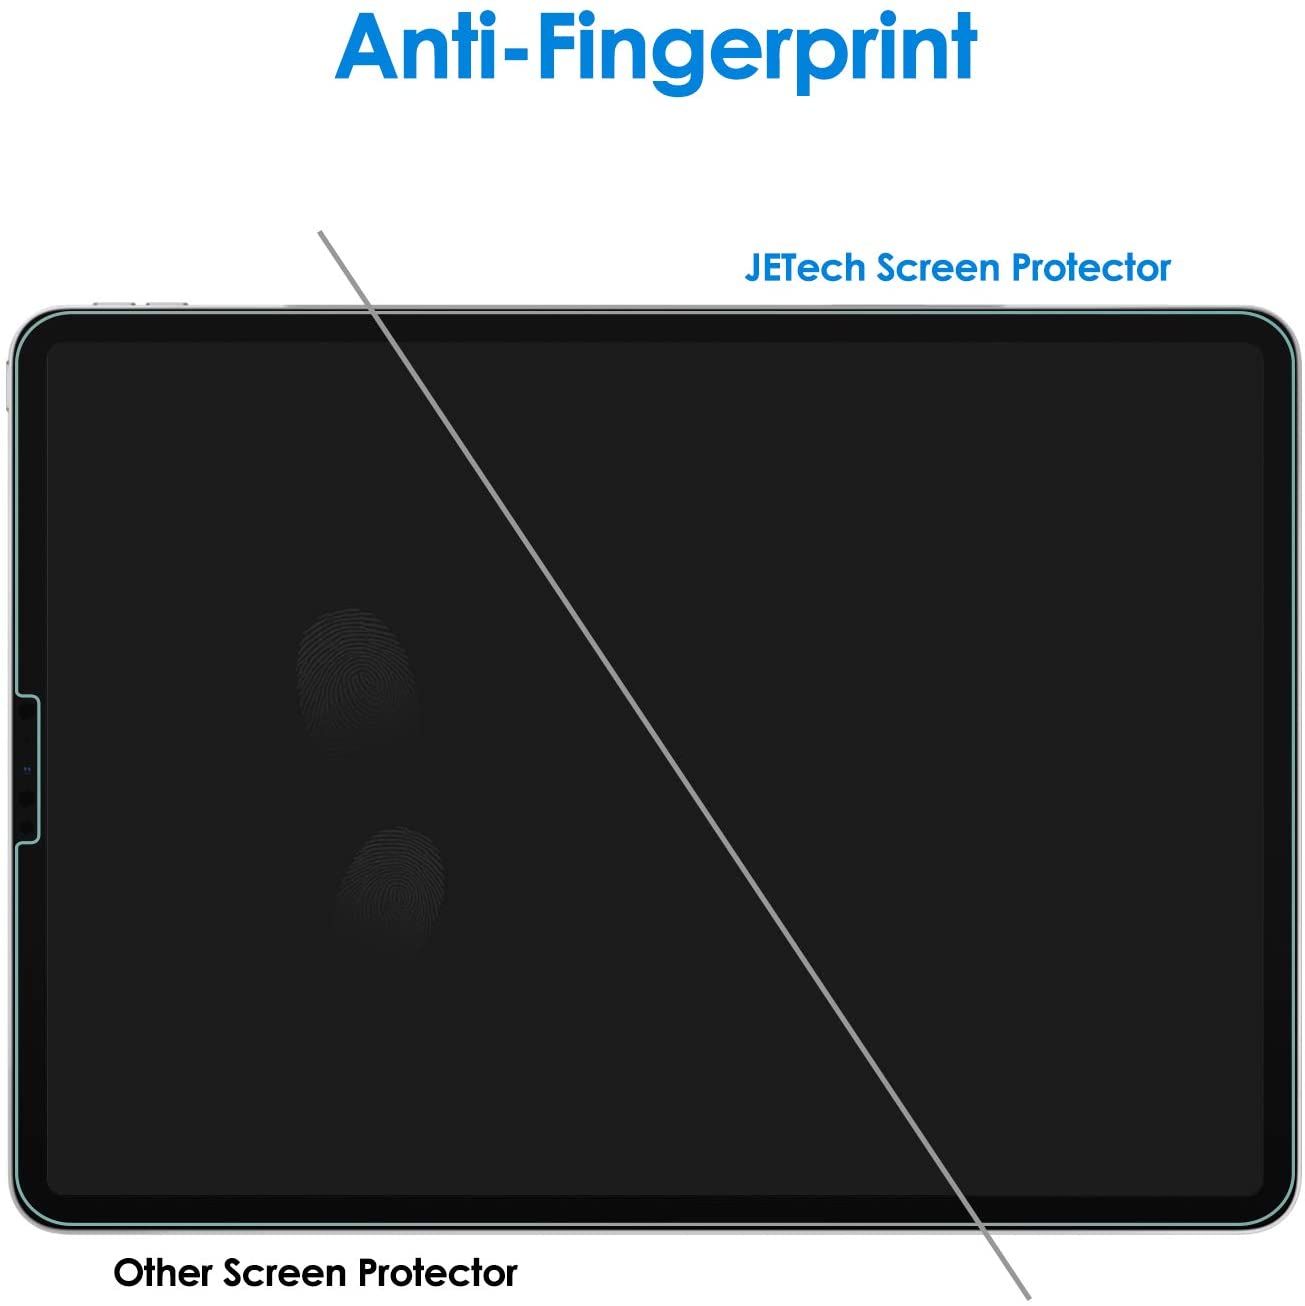 JETech iPad Pro Screen Protector fingerprint resistance